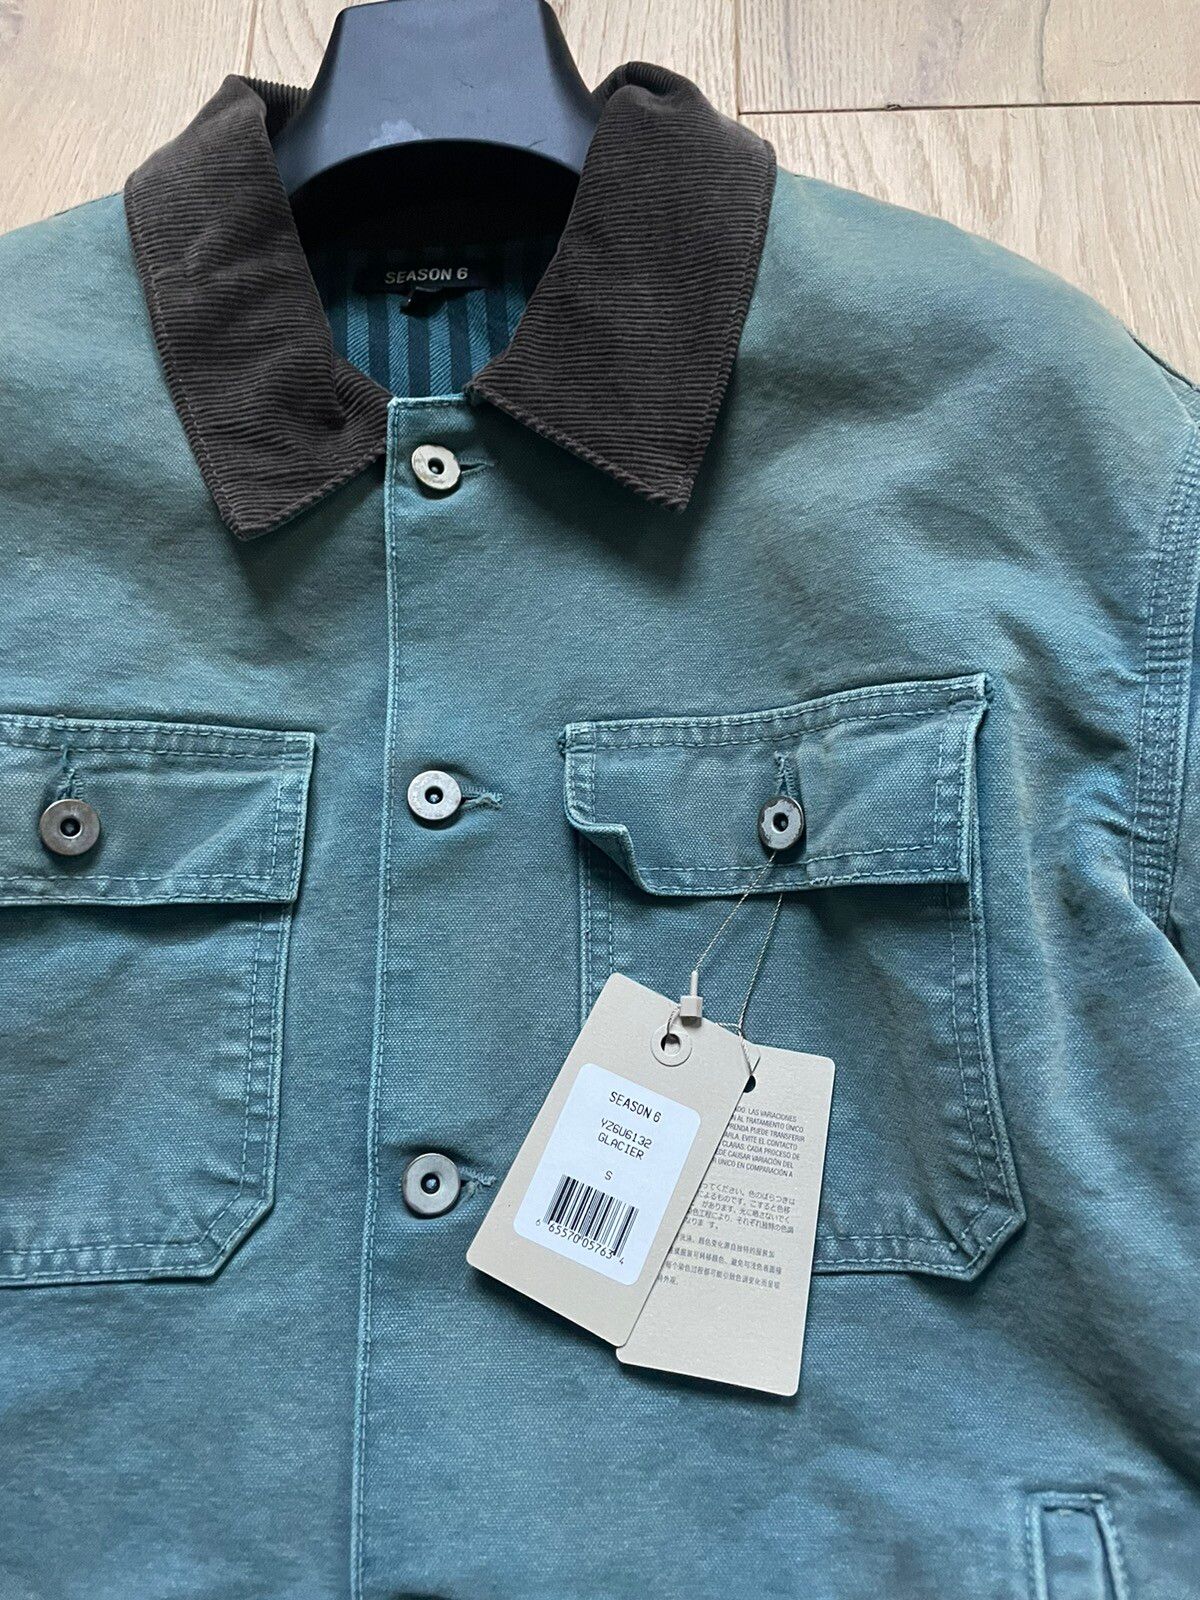 Yeezy Season Yeezy Season 6 Flannel Lined Denim Jacket Glacier Size US S / EU 44-46 / 1 - 2 Preview